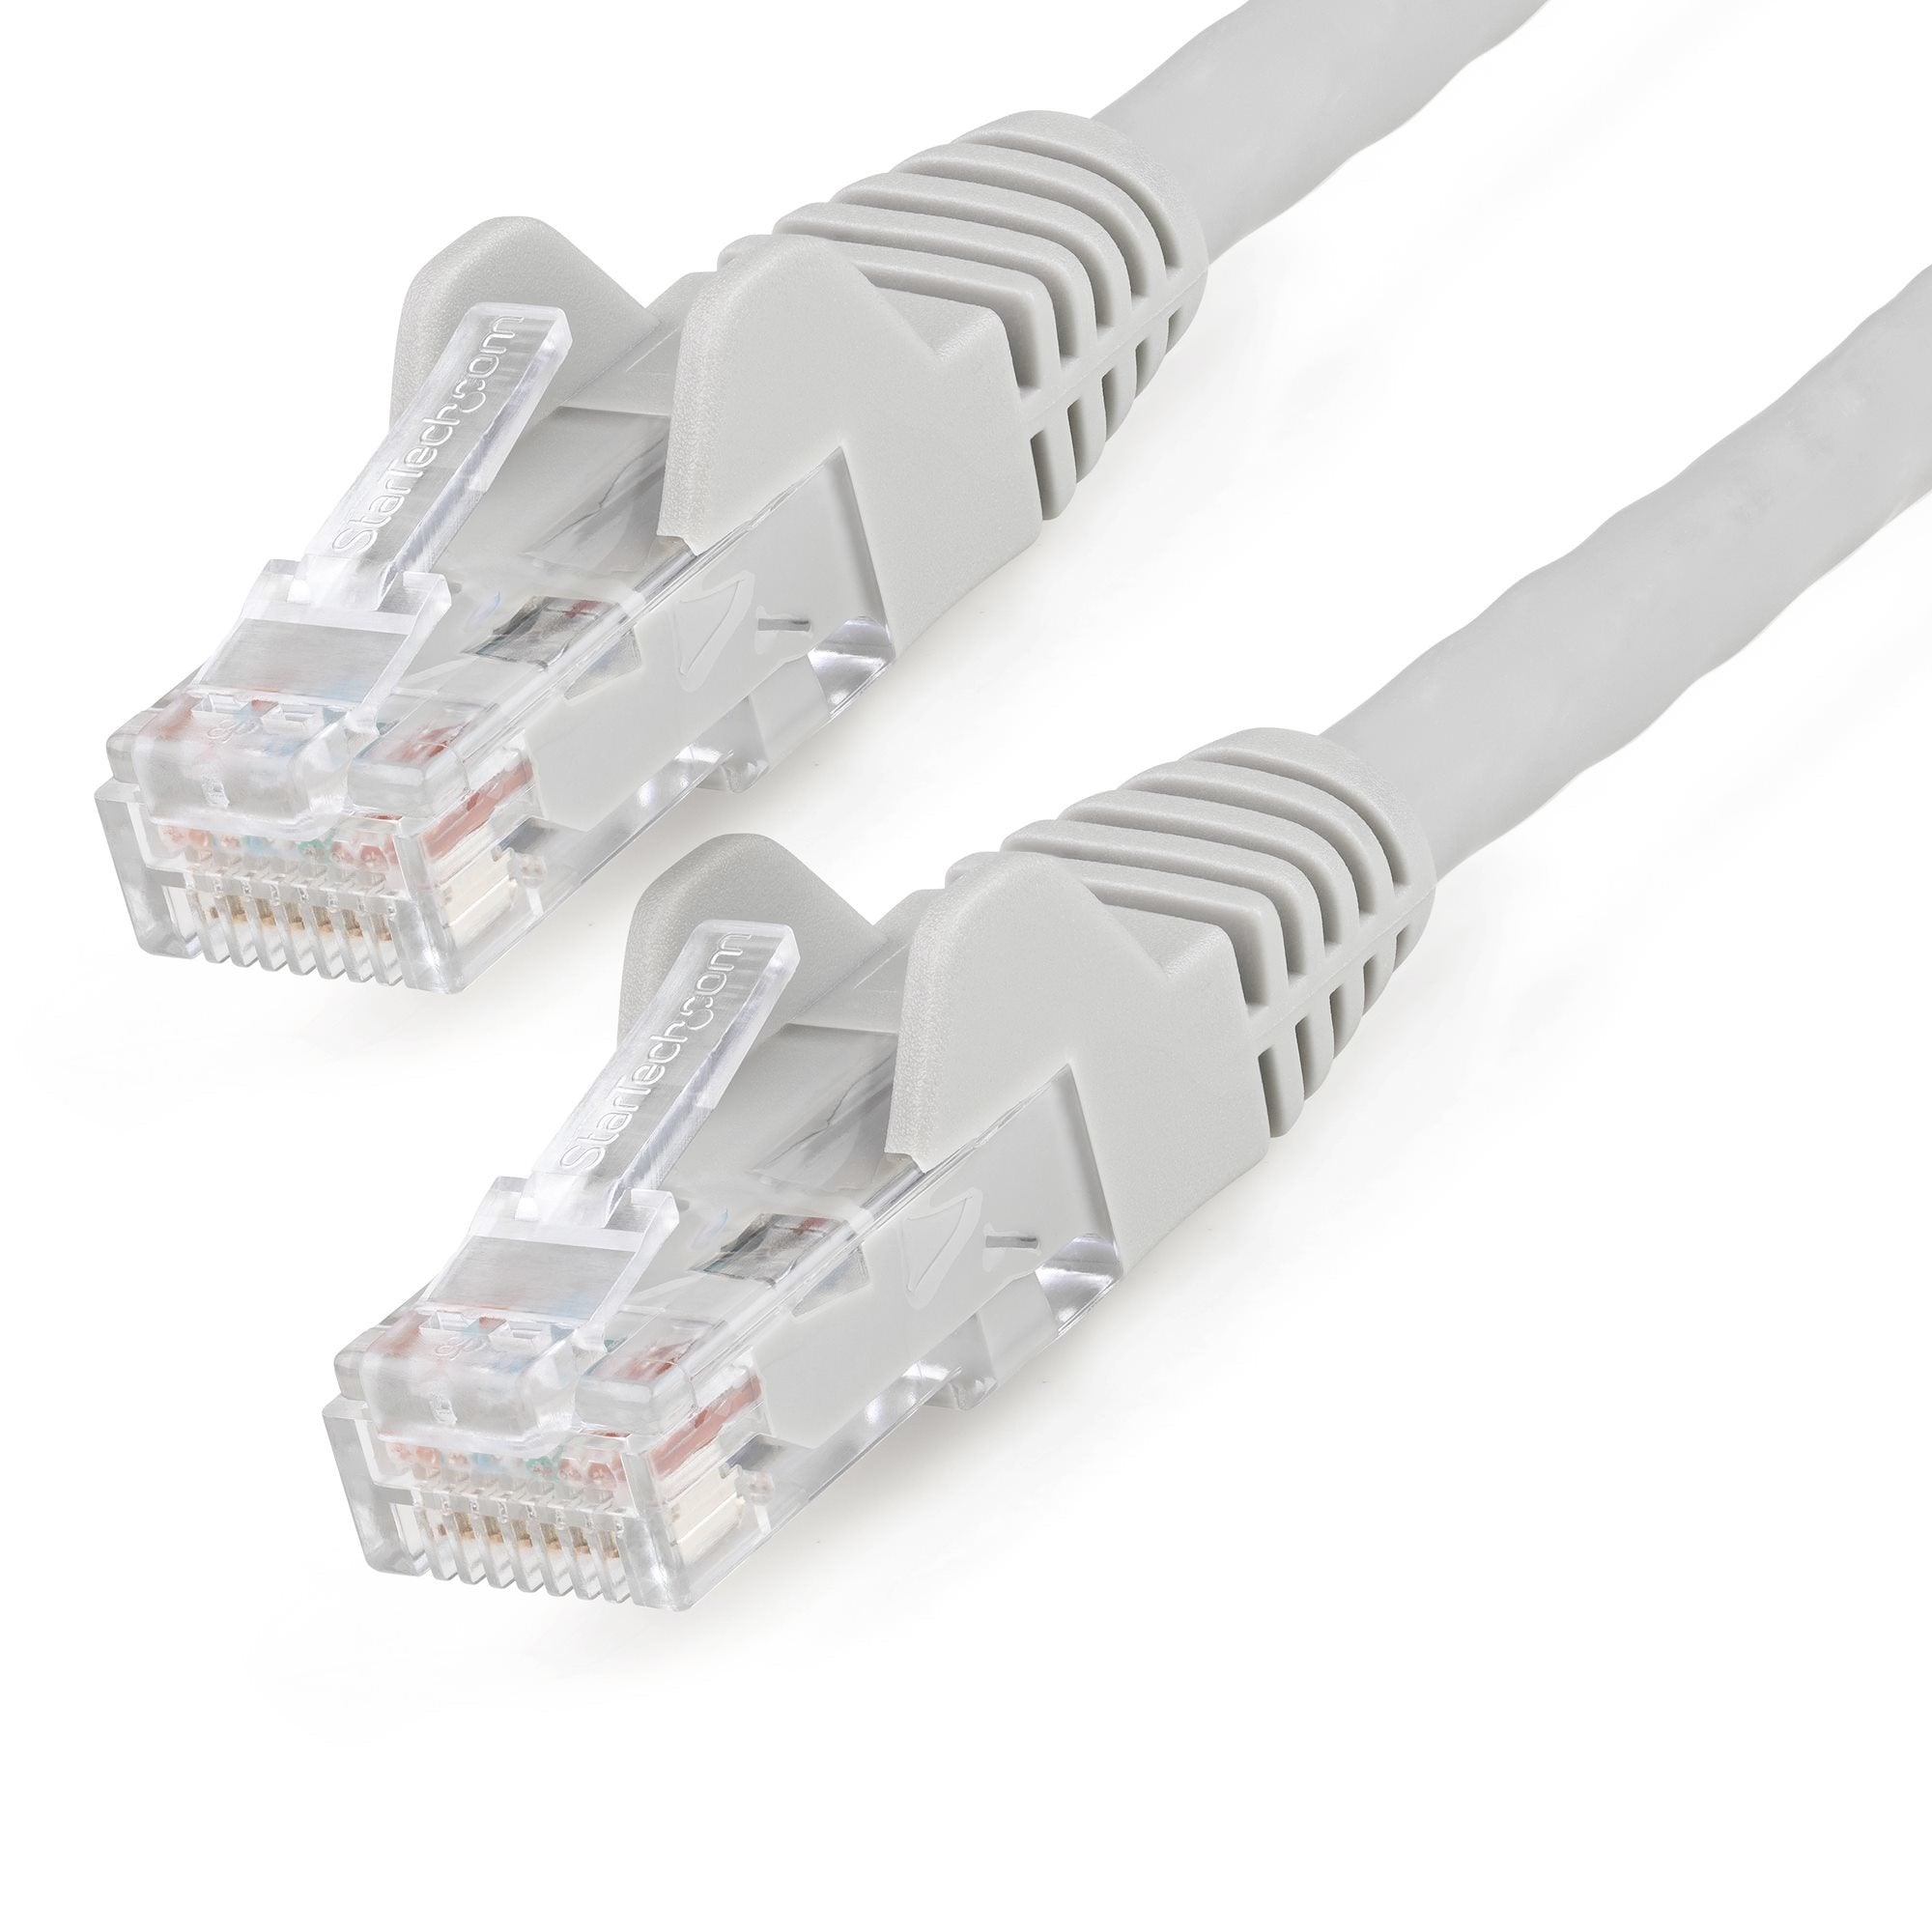 StarTech.com 15m CAT6 Ethernet Cable - LSZH (Low Smoke Zero Halogen) - 10 Gigabit 650MHz 100W PoE RJ45 10GbE UTP Network Patch Cord Snagless with Strain Relief - Grey, CAT 6, ETL Verified, 24AWG